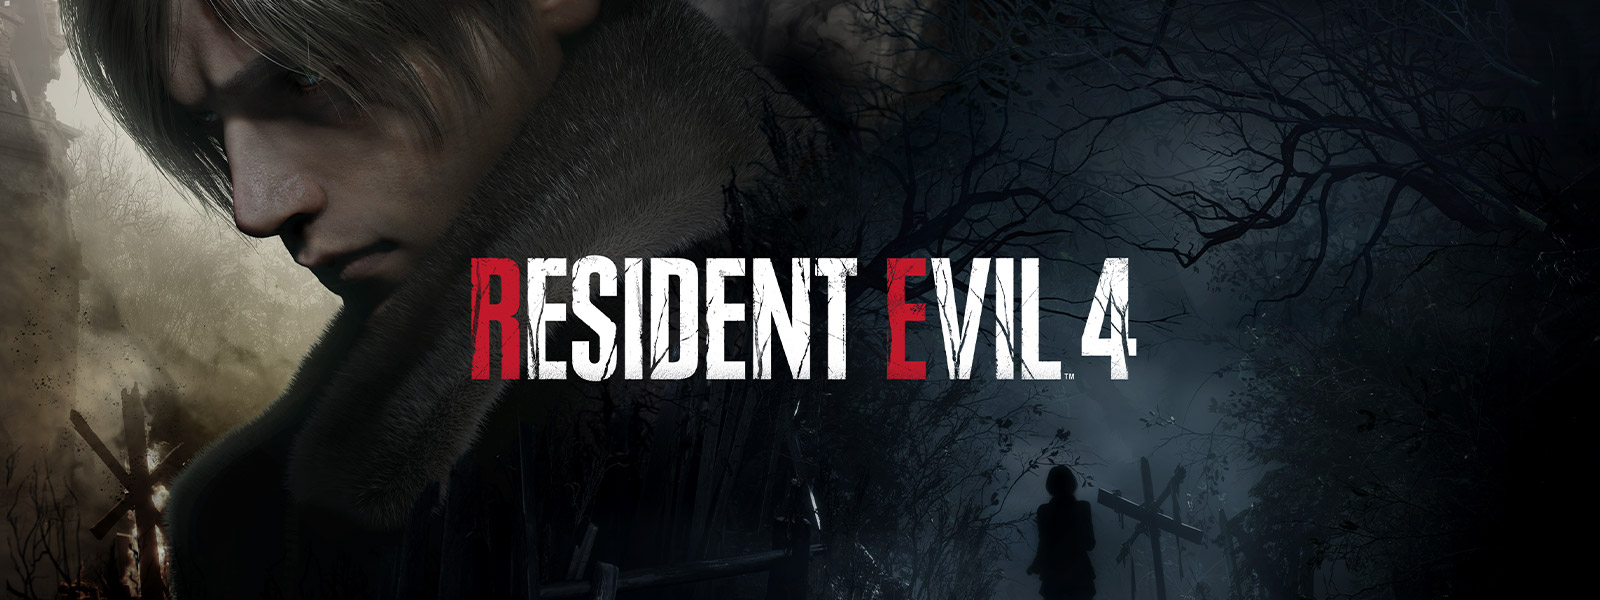 Resident Evil 4，灰髮男人表情嚴肅地轉身離開，而有個女人走在陰森的森林小徑上。